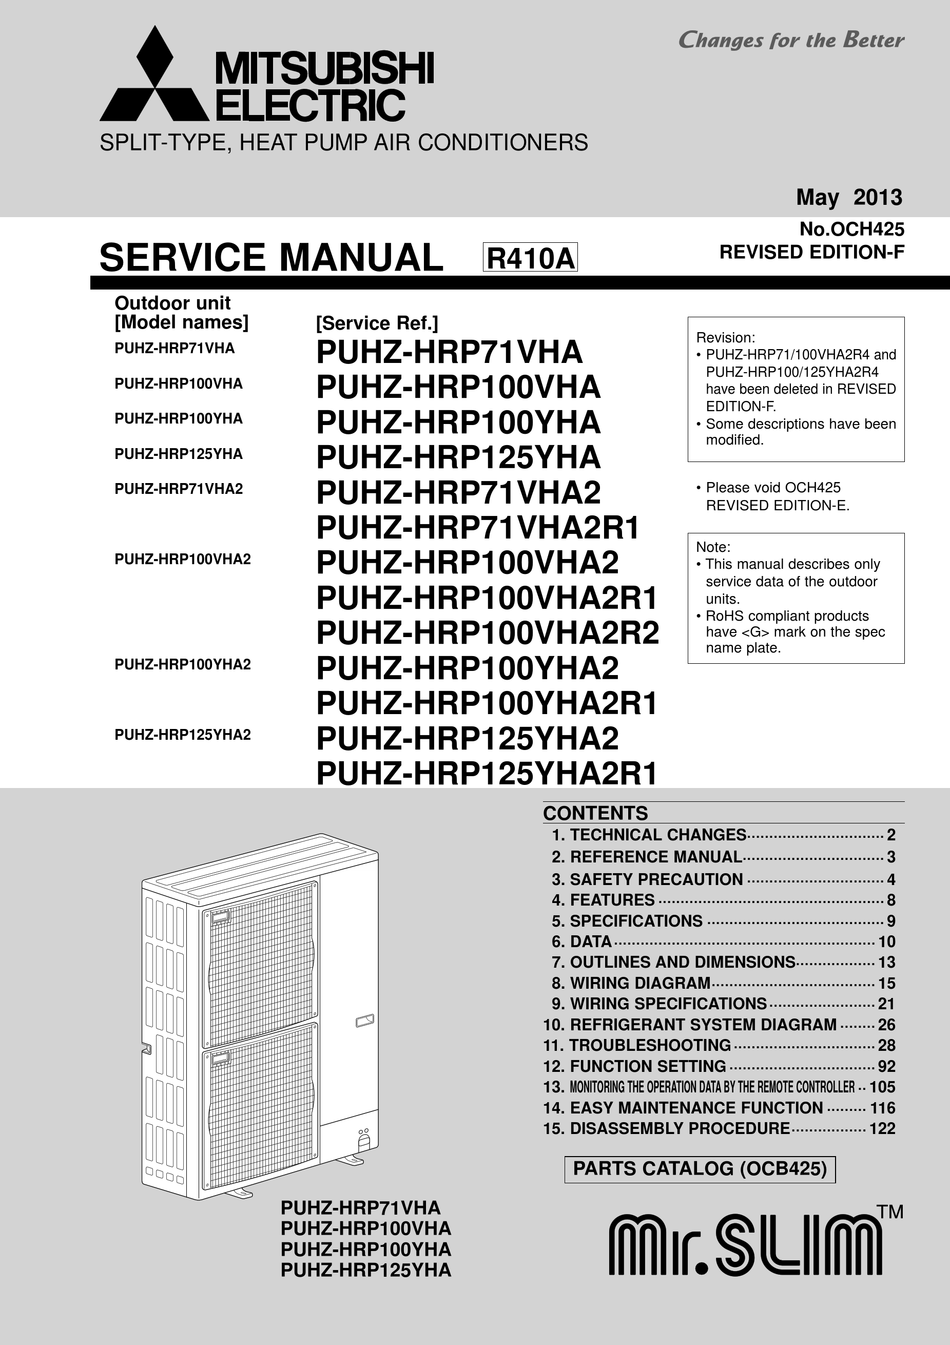 MITSUBISHI ELECTRIC PUHZ-HRP71VHA SERVICE MANUAL Pdf Download - ManualsLib